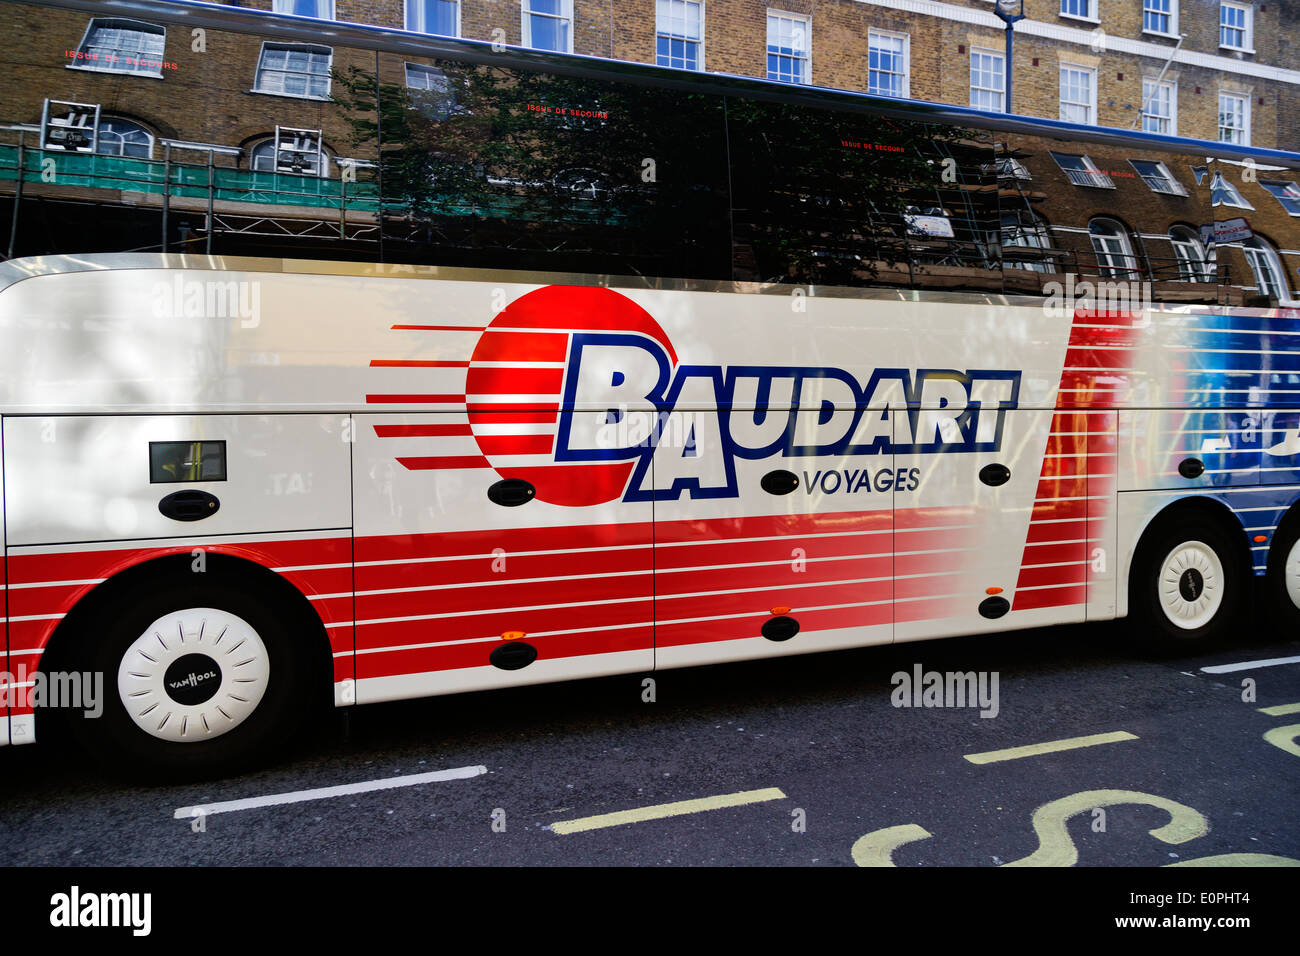 Autobus turistico, Baudart Voyages, Baker Street, London, England, Regno Unito Foto Stock